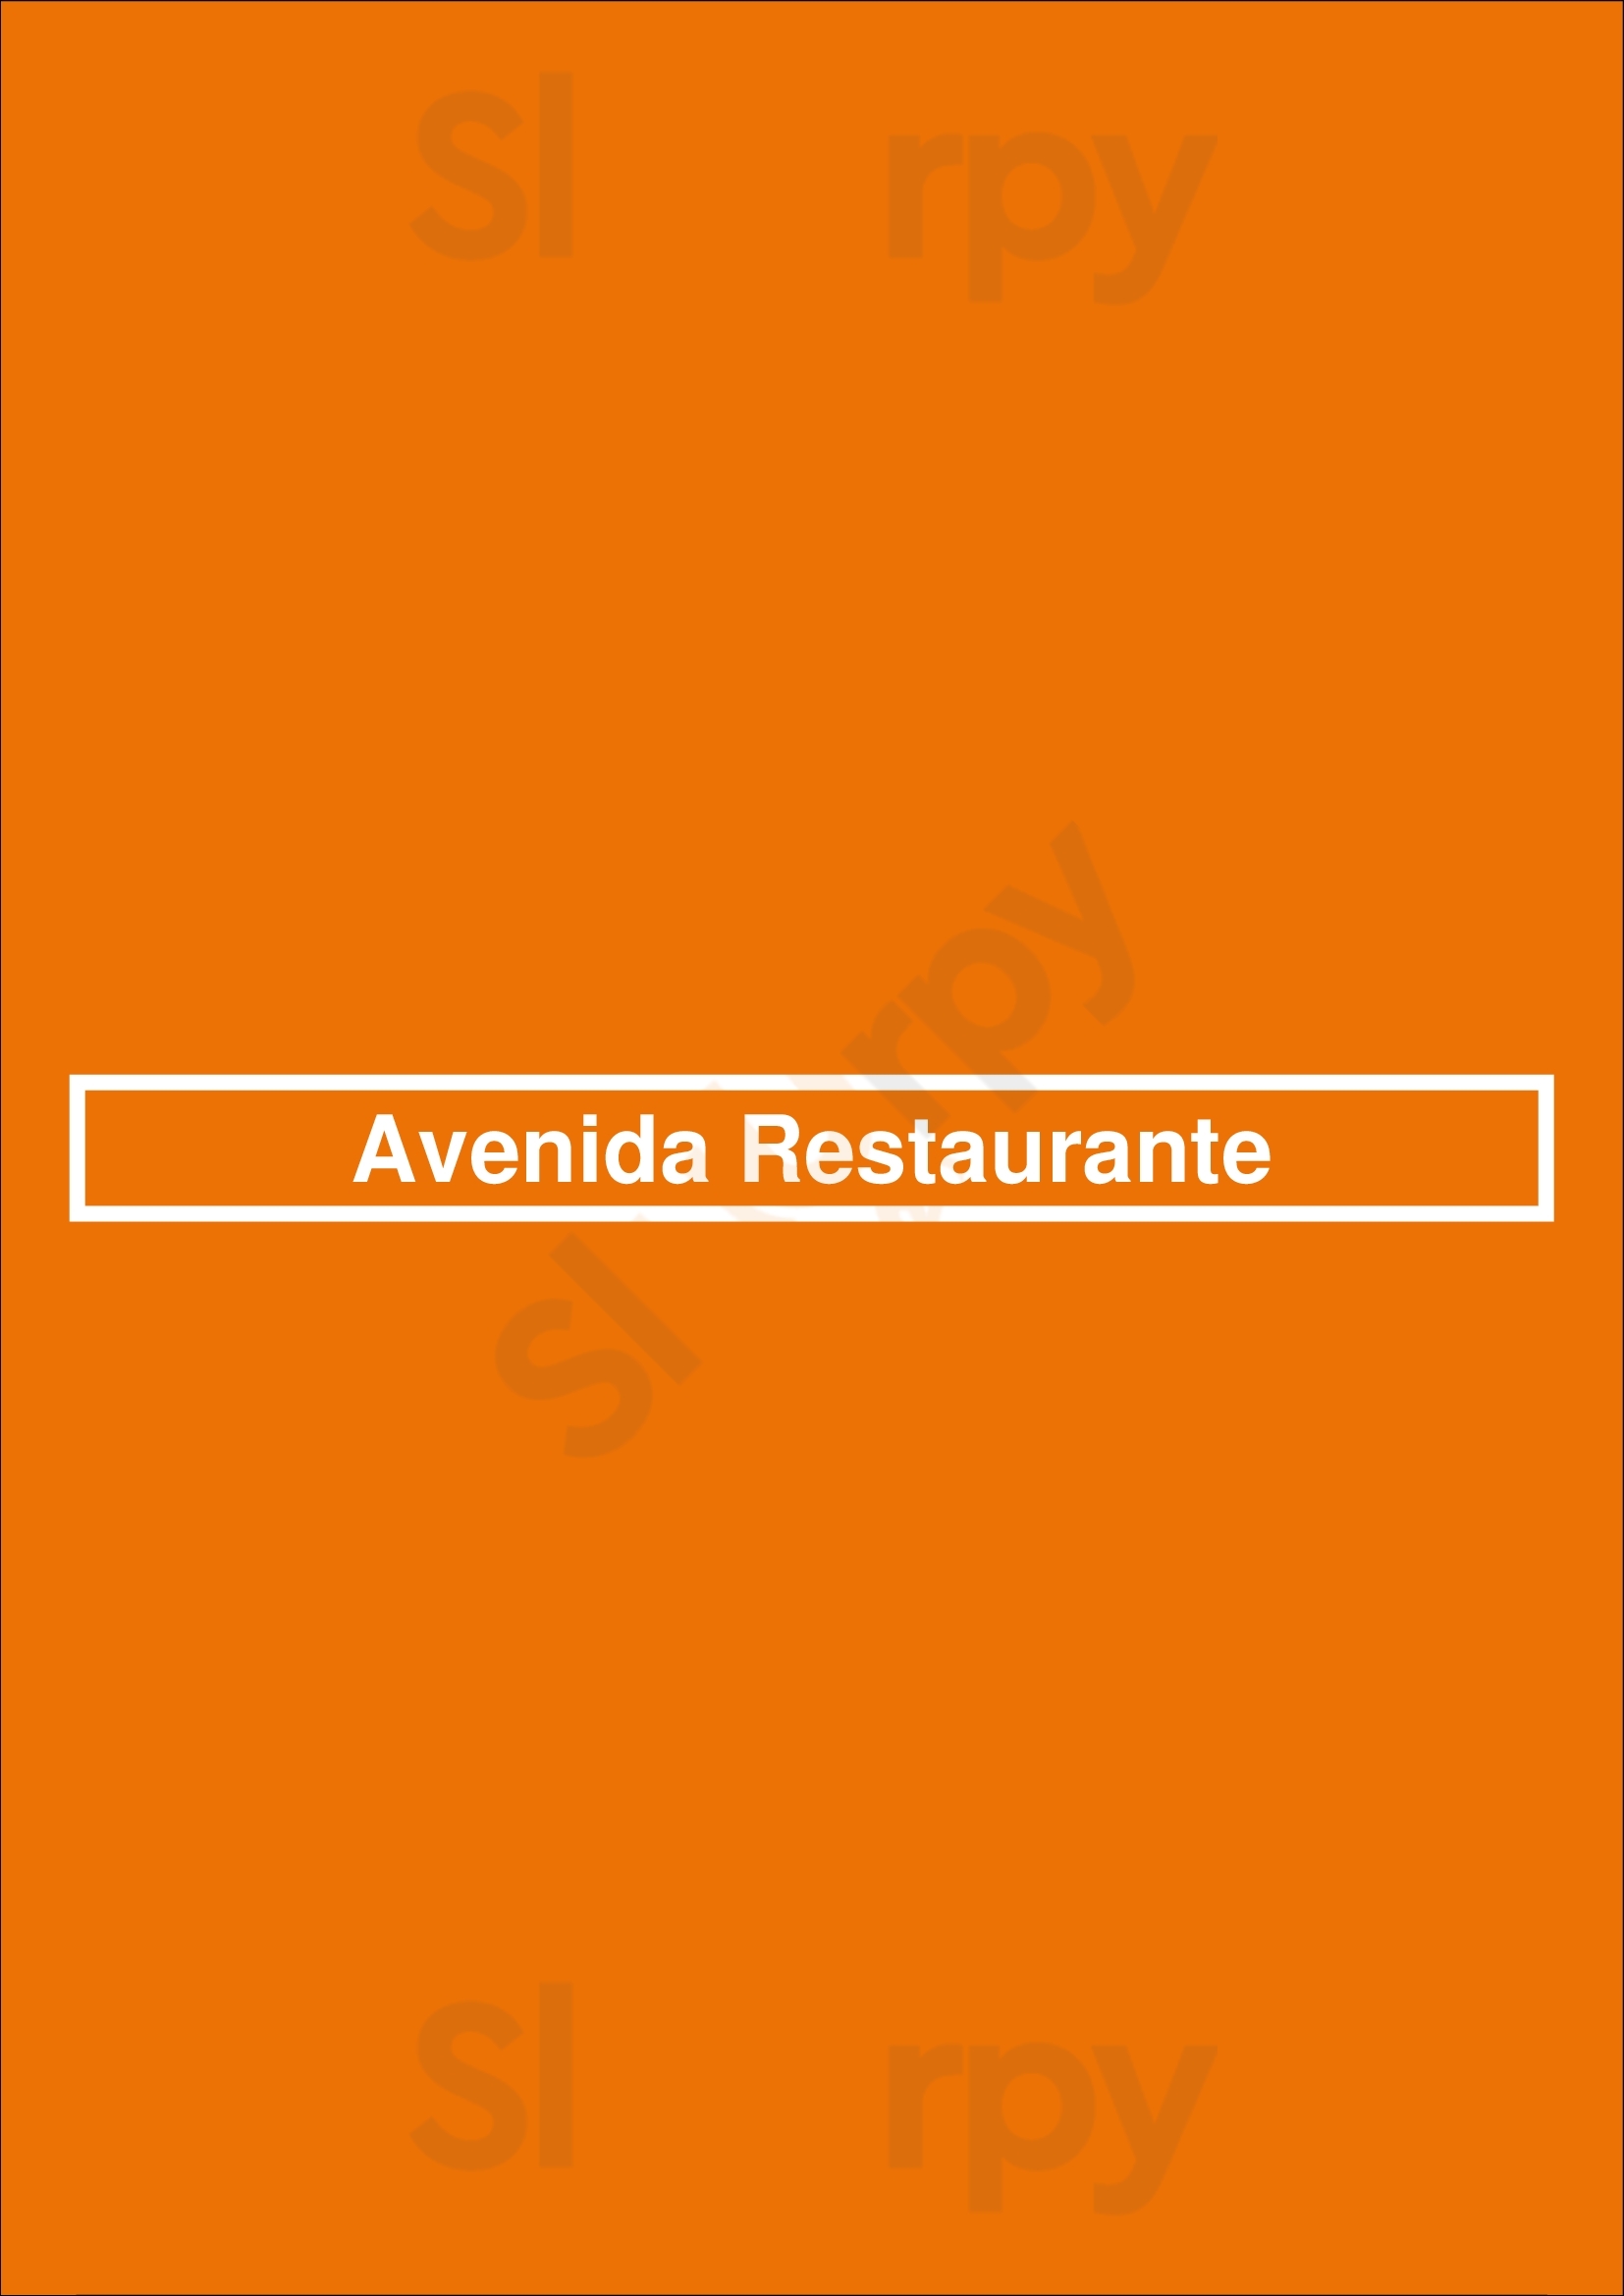 Avenida Restaurante Lagos Menu - 1